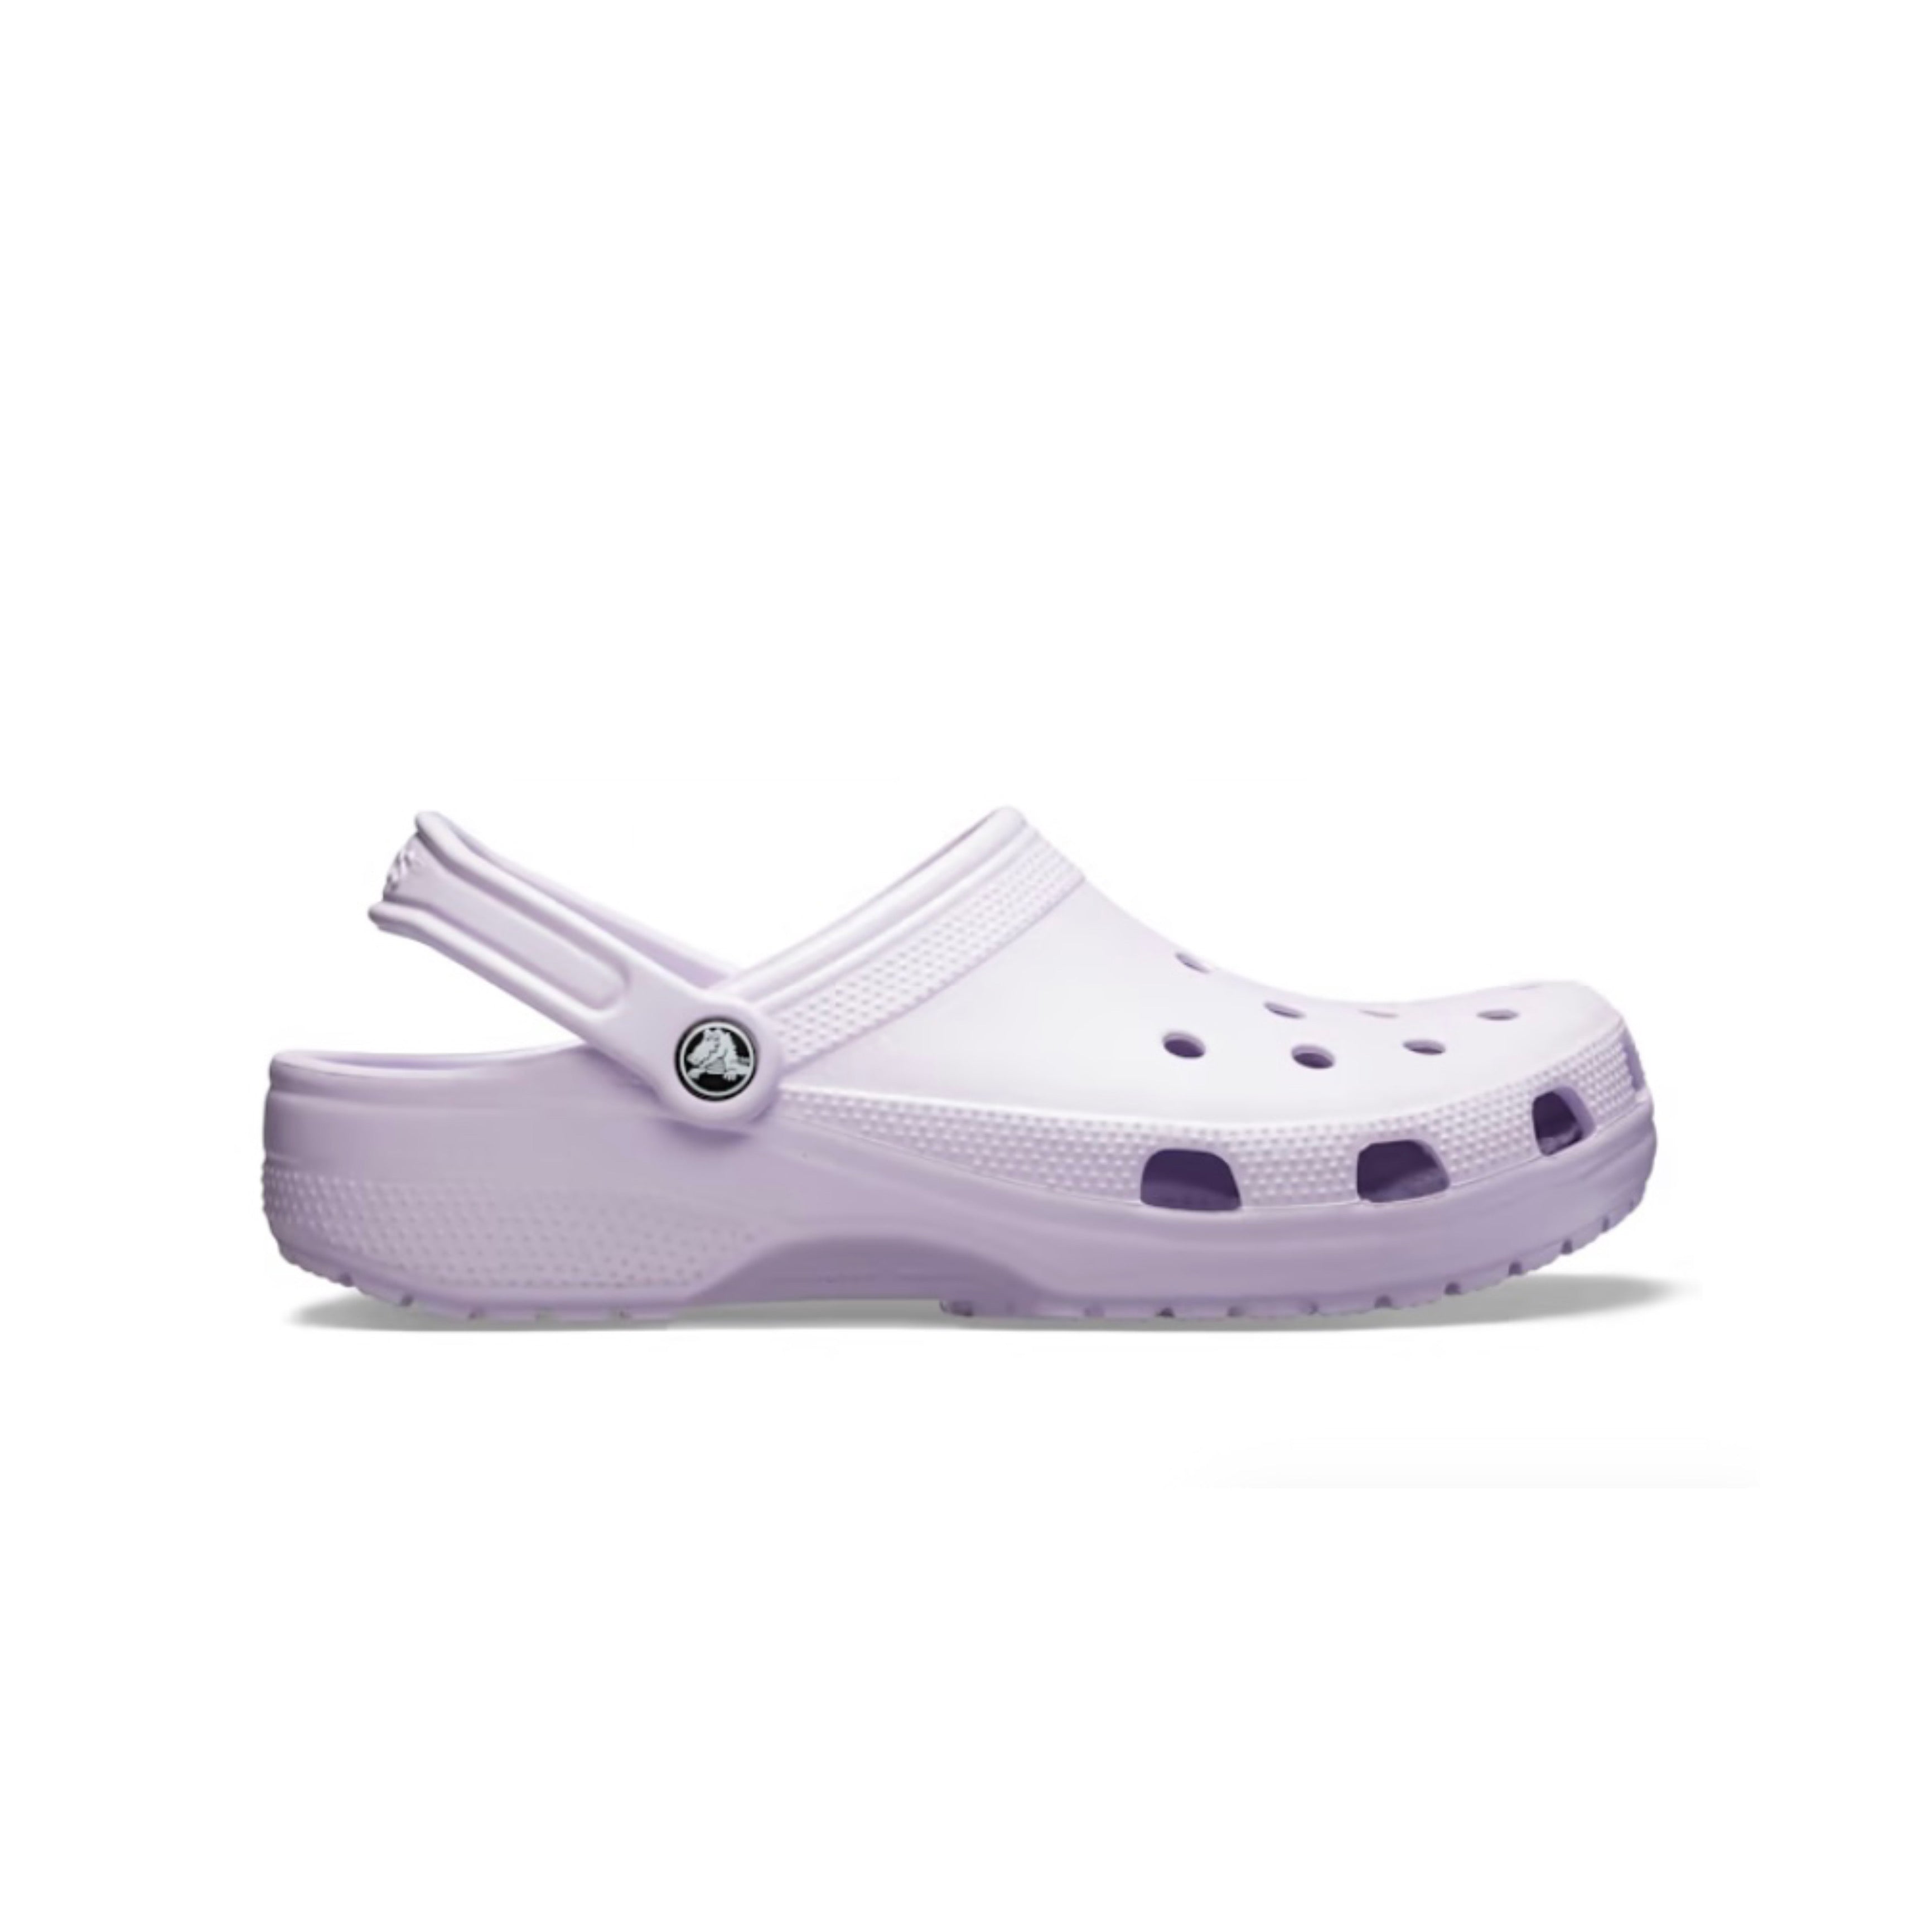 Crocs violets